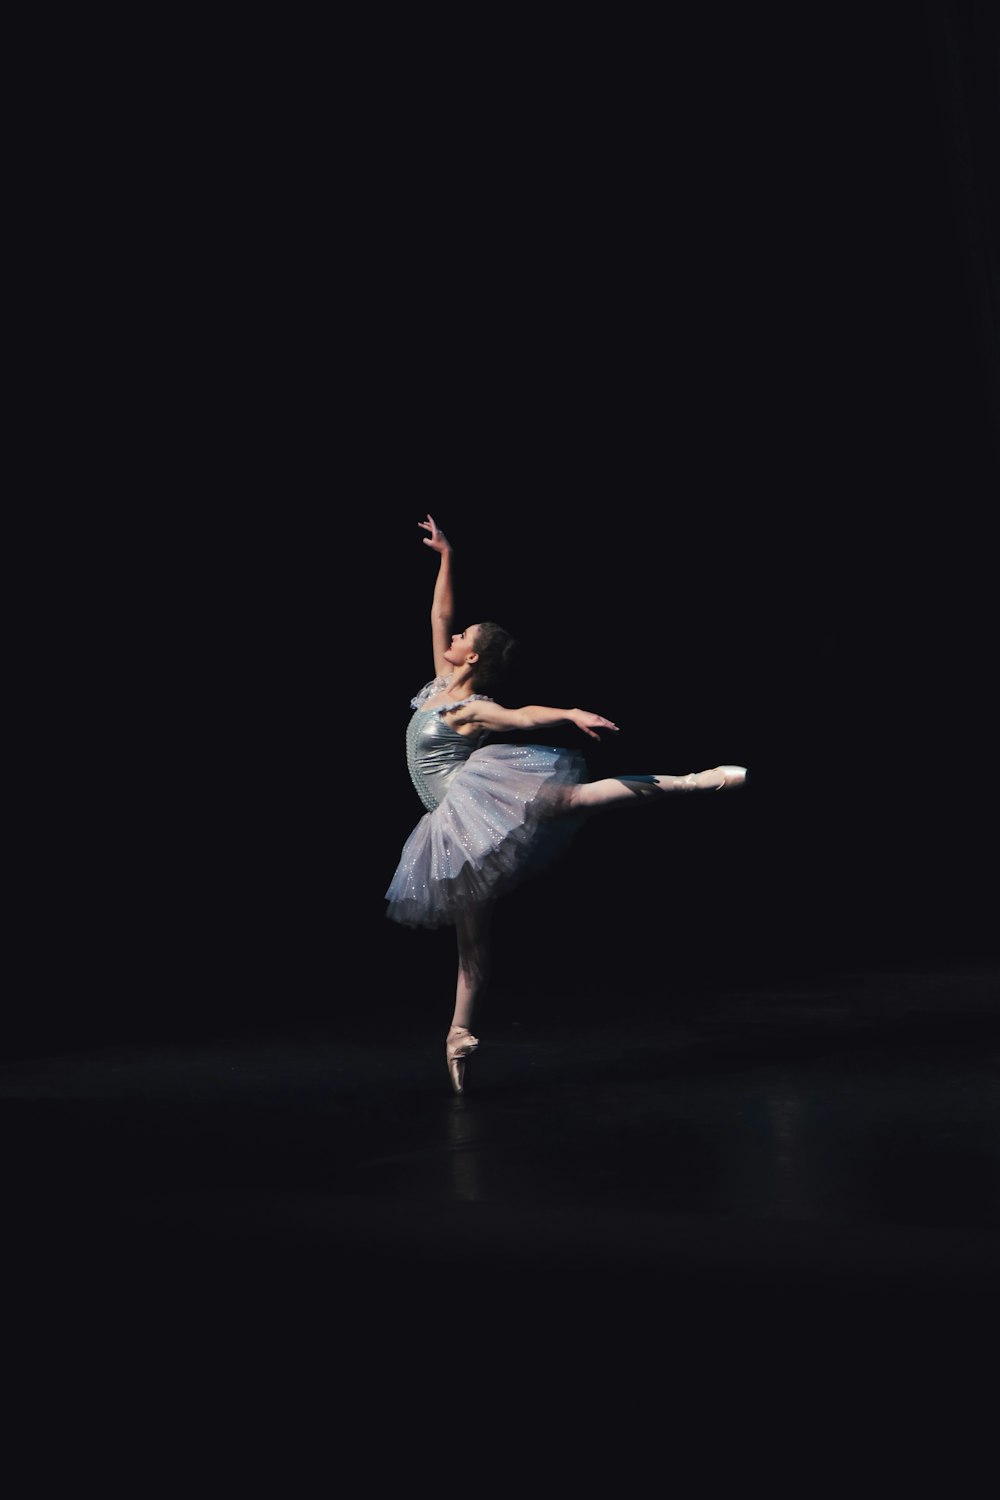 27+ Ballet Pictures | Download Free Images on Unsplash